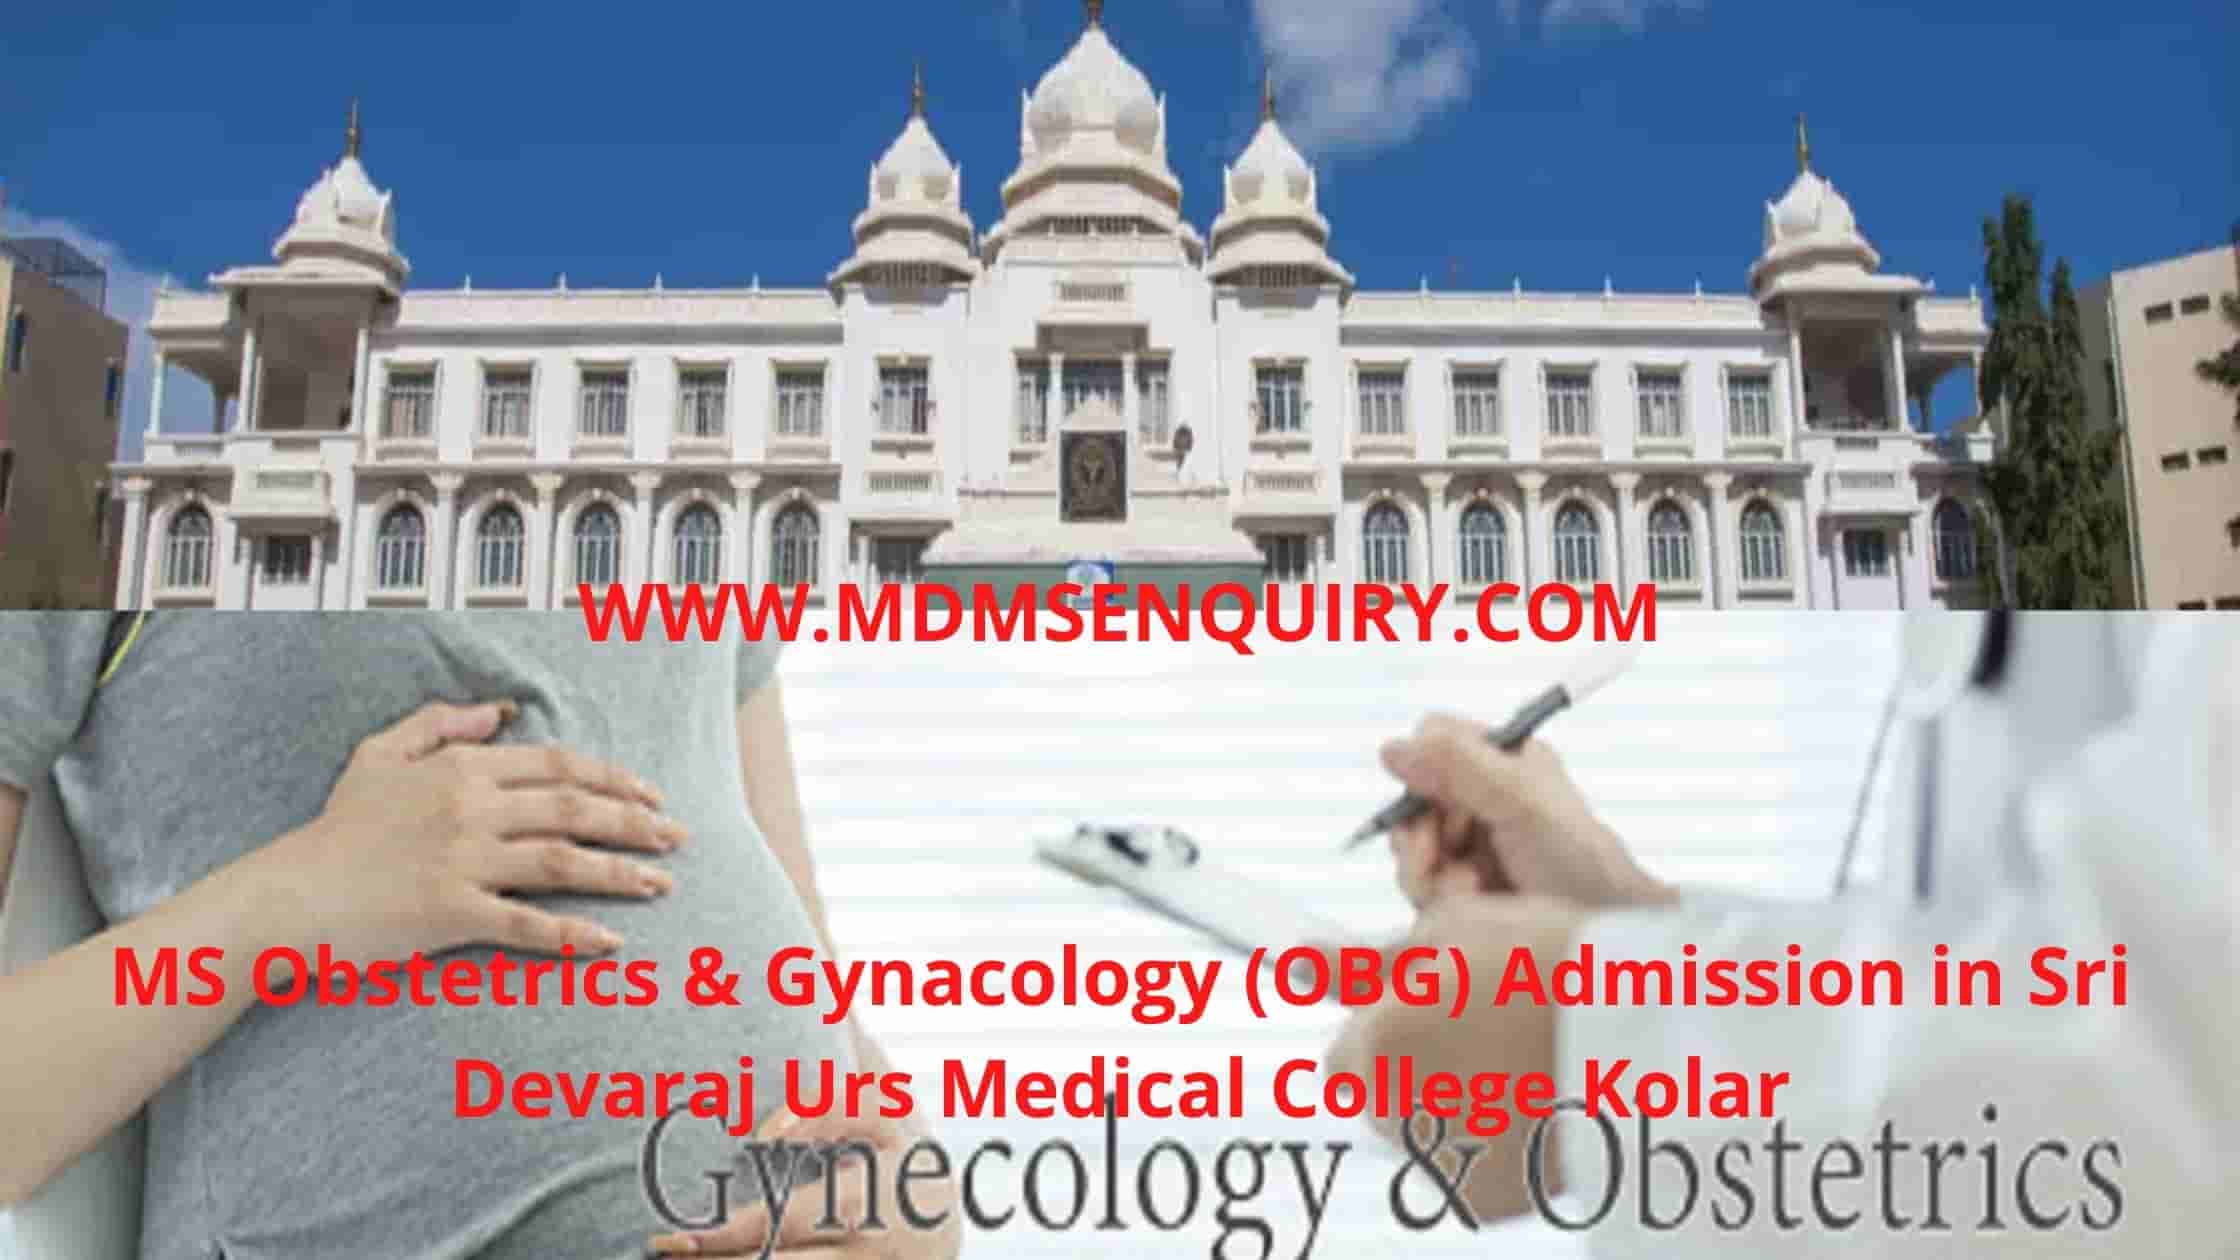 MS Obstetrics & Gynacology (OBG) admission in Sri Devaraj Urs Medical College Kolar